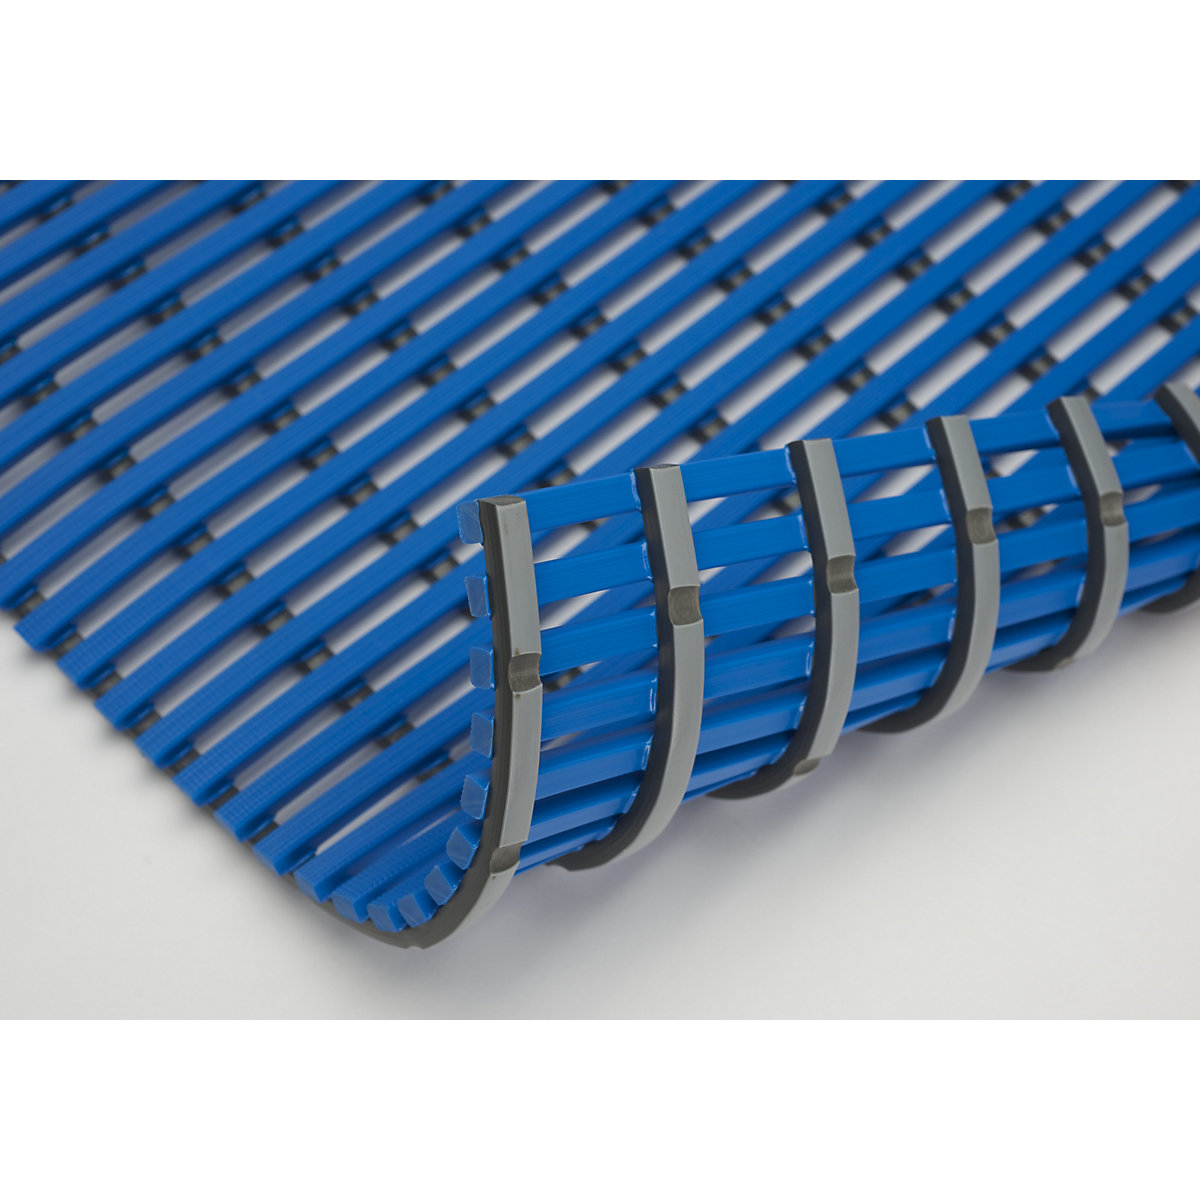 Wet room mat, anti-bacterial, per metre, blue, width 600 mm